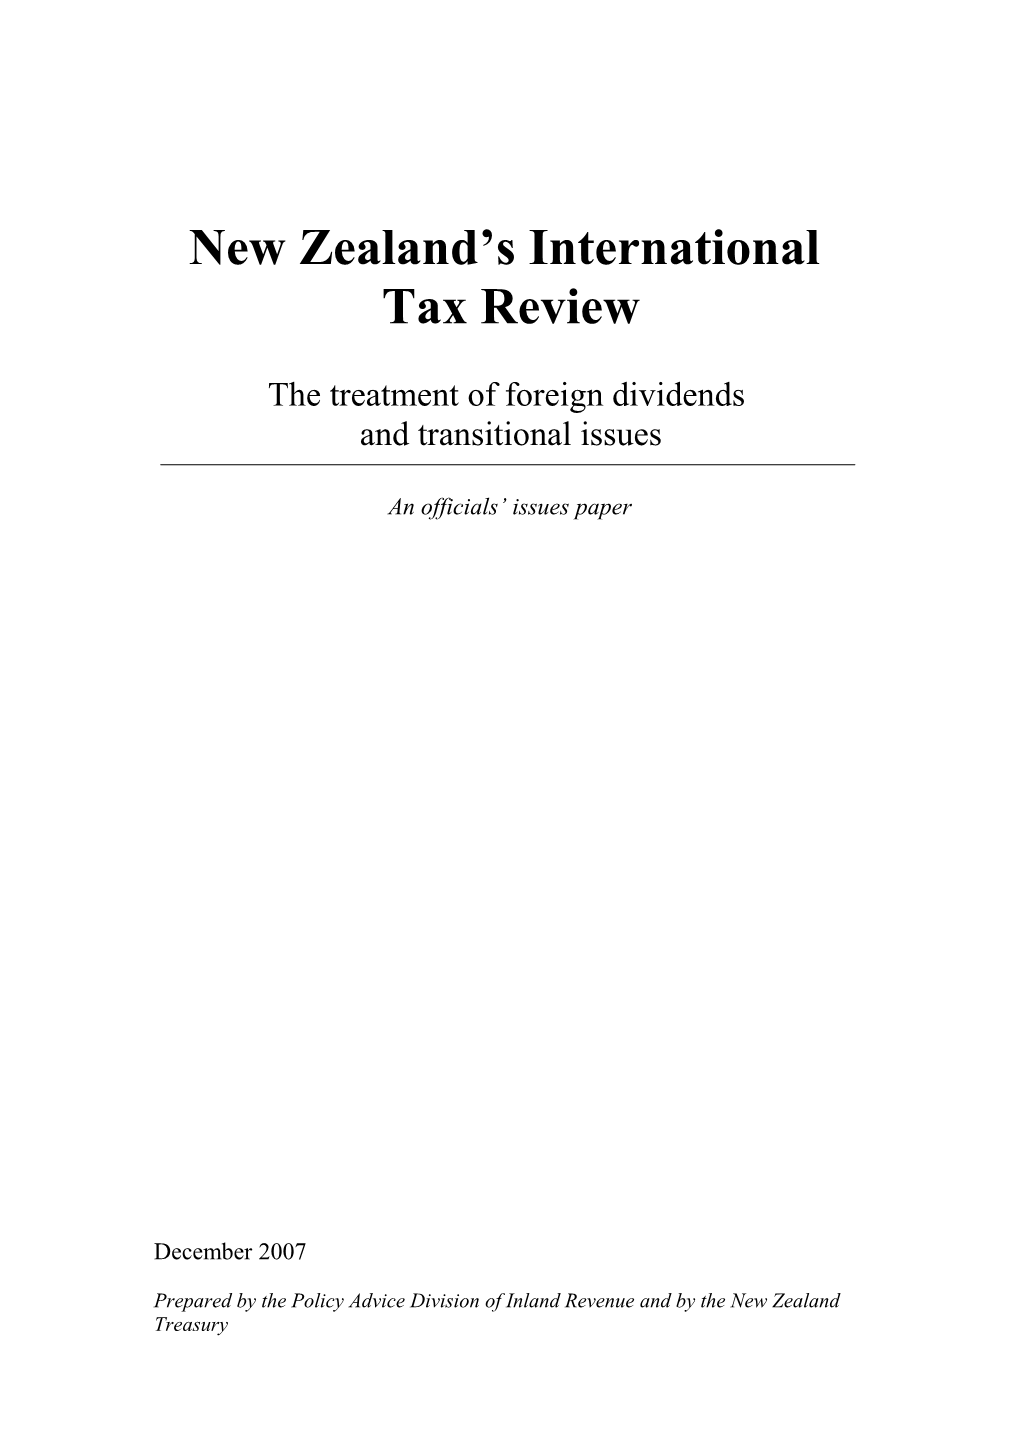 New Zealand's International Tax Review